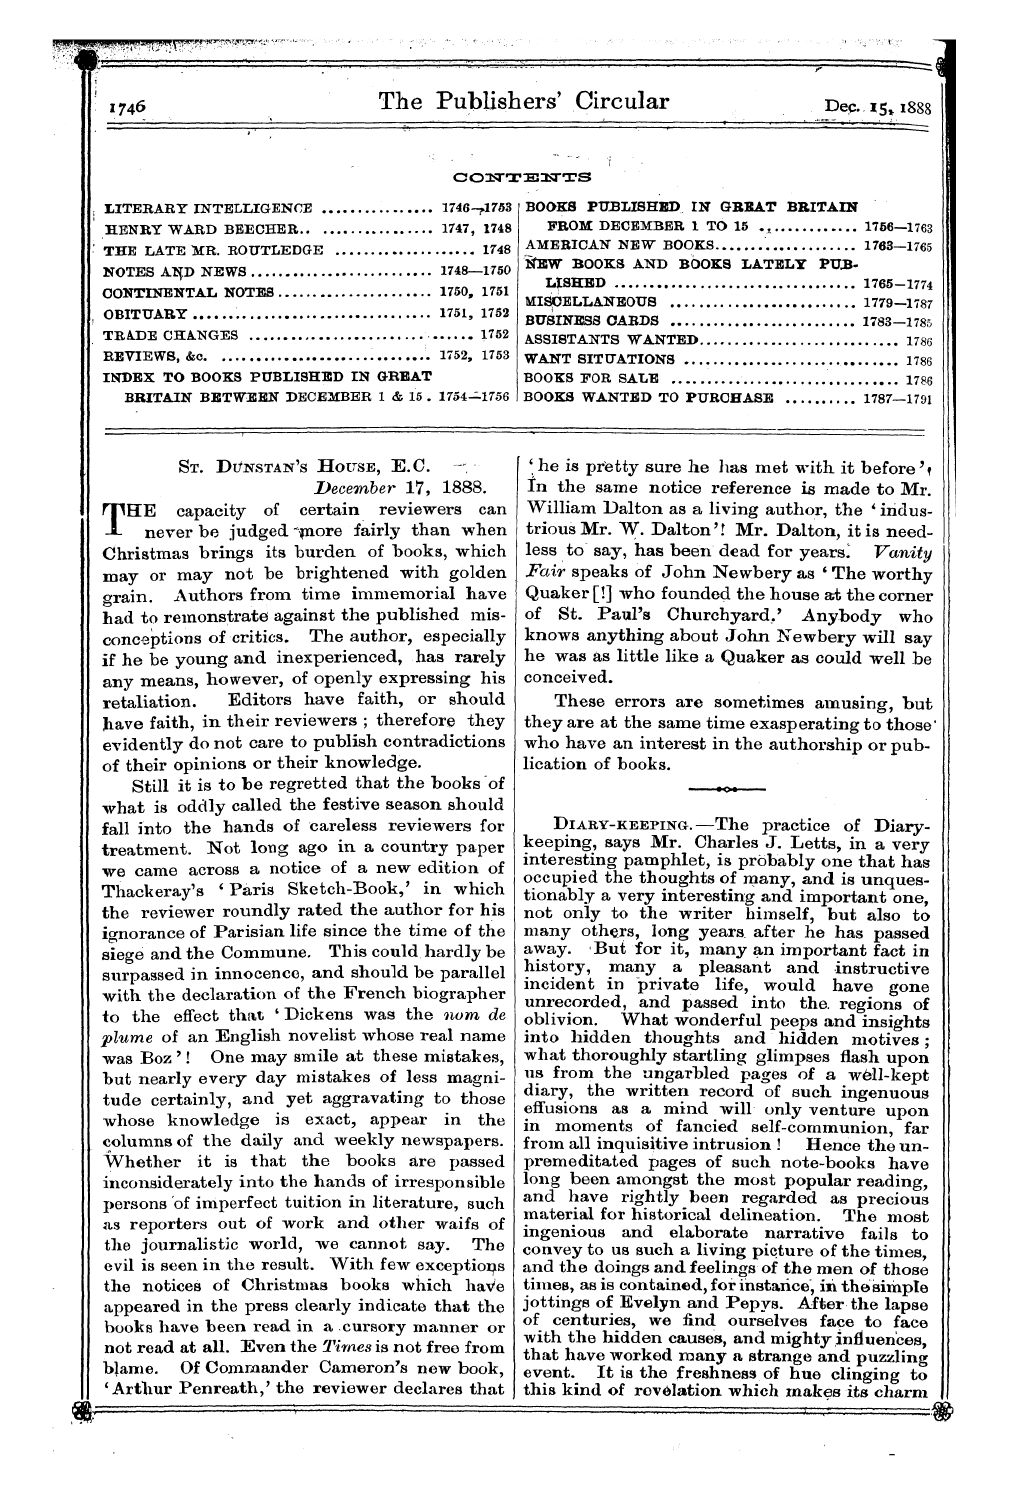 Publishers’ Circular (1880-1890): jS F Y, 1st edition - ^ ¦ ^ V ¦ ¦ ¦ ¦ ¦ ¦ ' "^1 1 1746 The Pub...